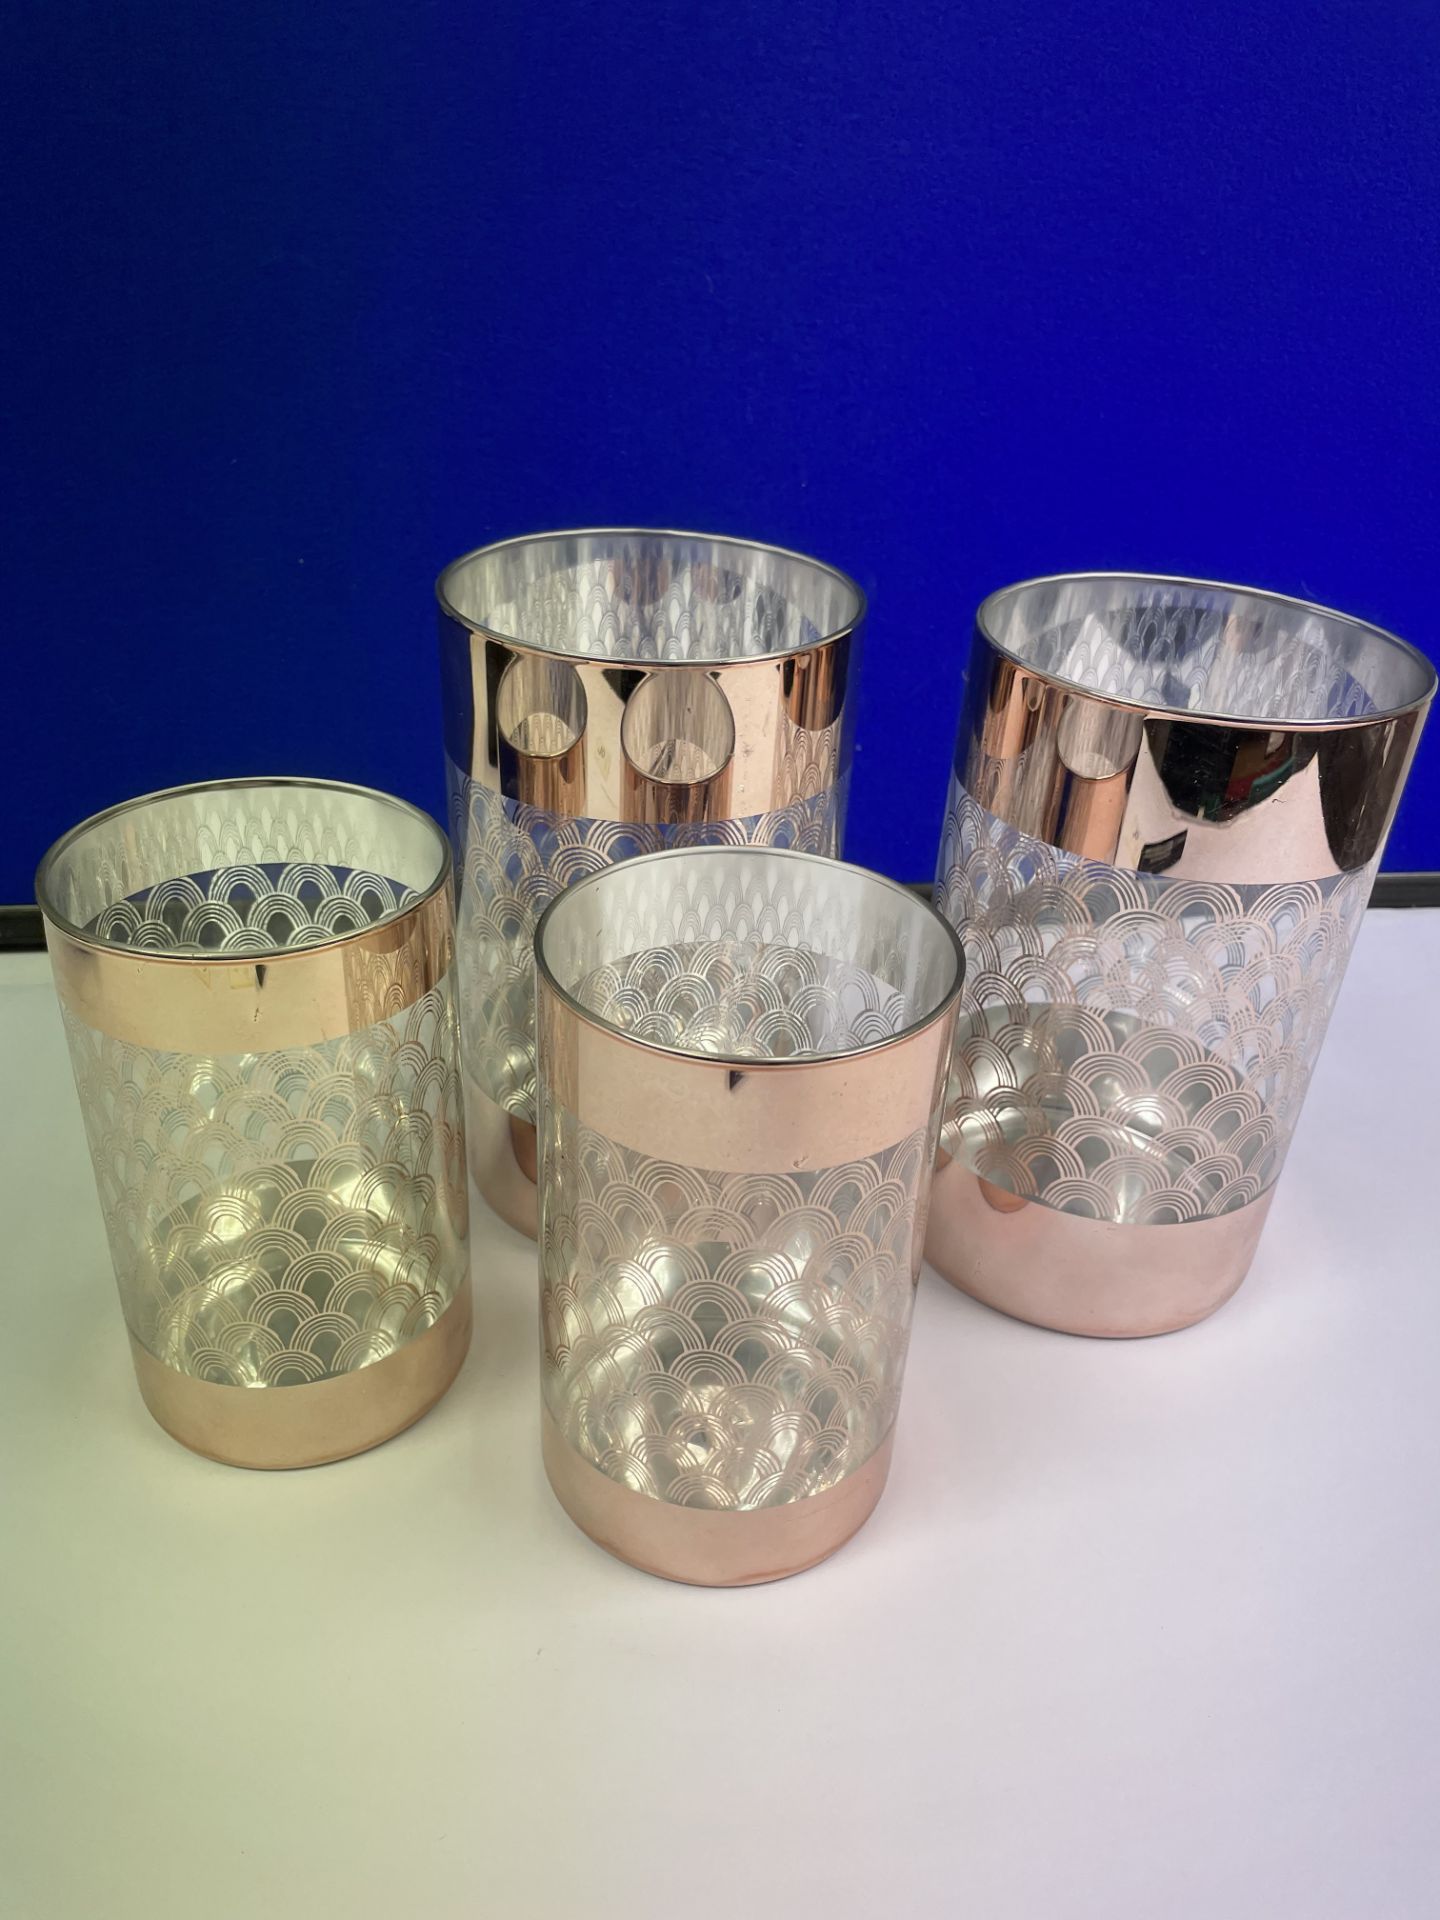 10 x Various Styles of Tealight Holders/Hurricane Vases - Image 6 of 6